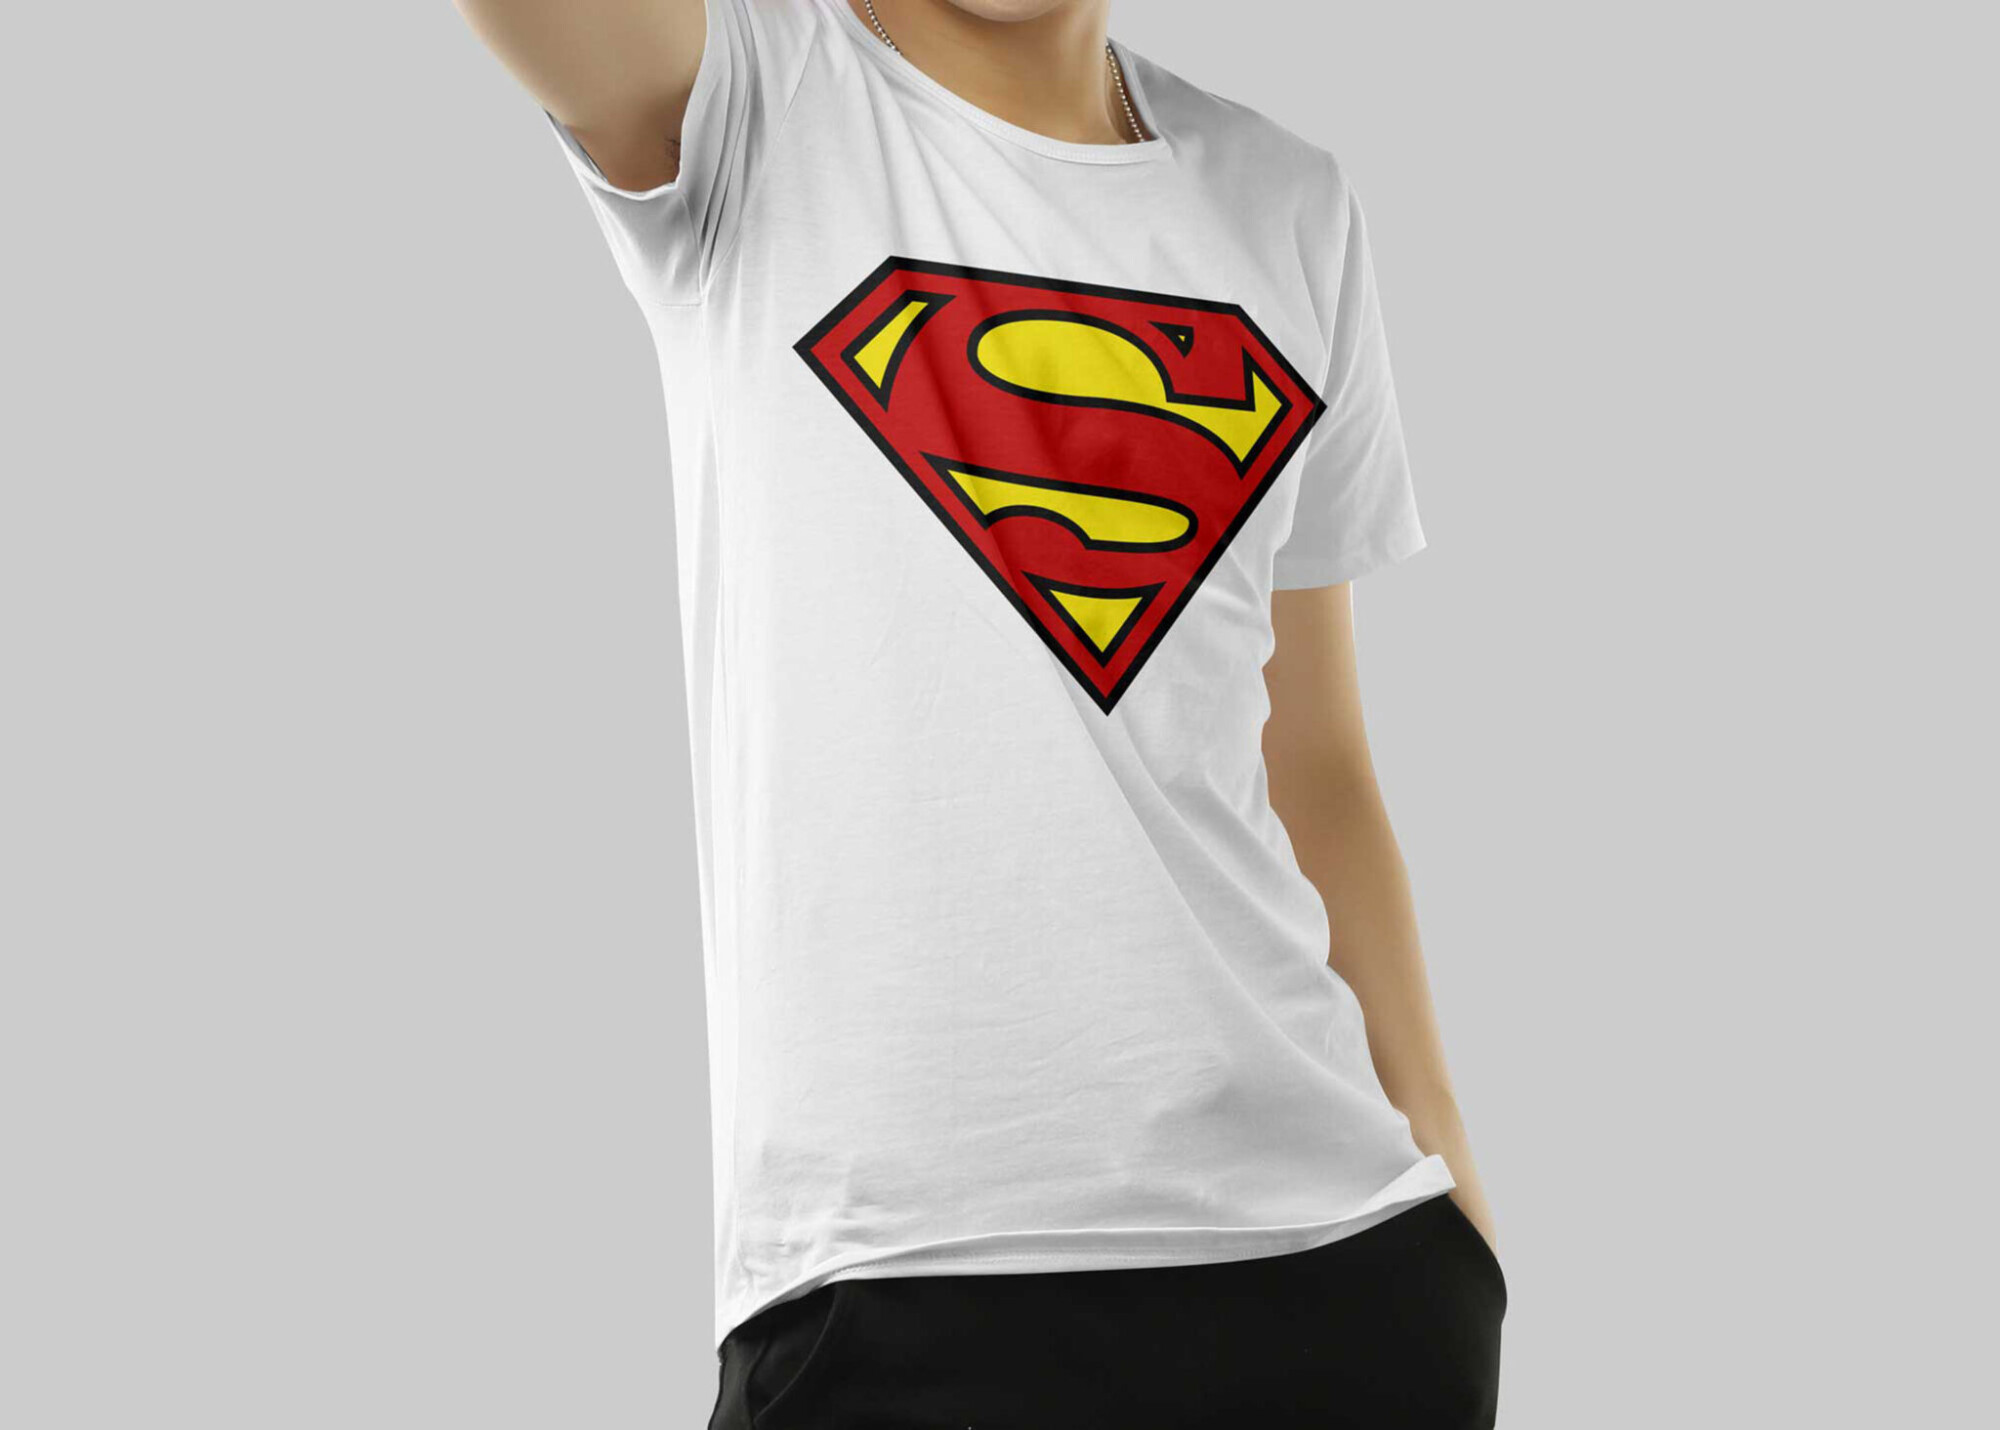 Free Superman Artwork T-shirt Mockup